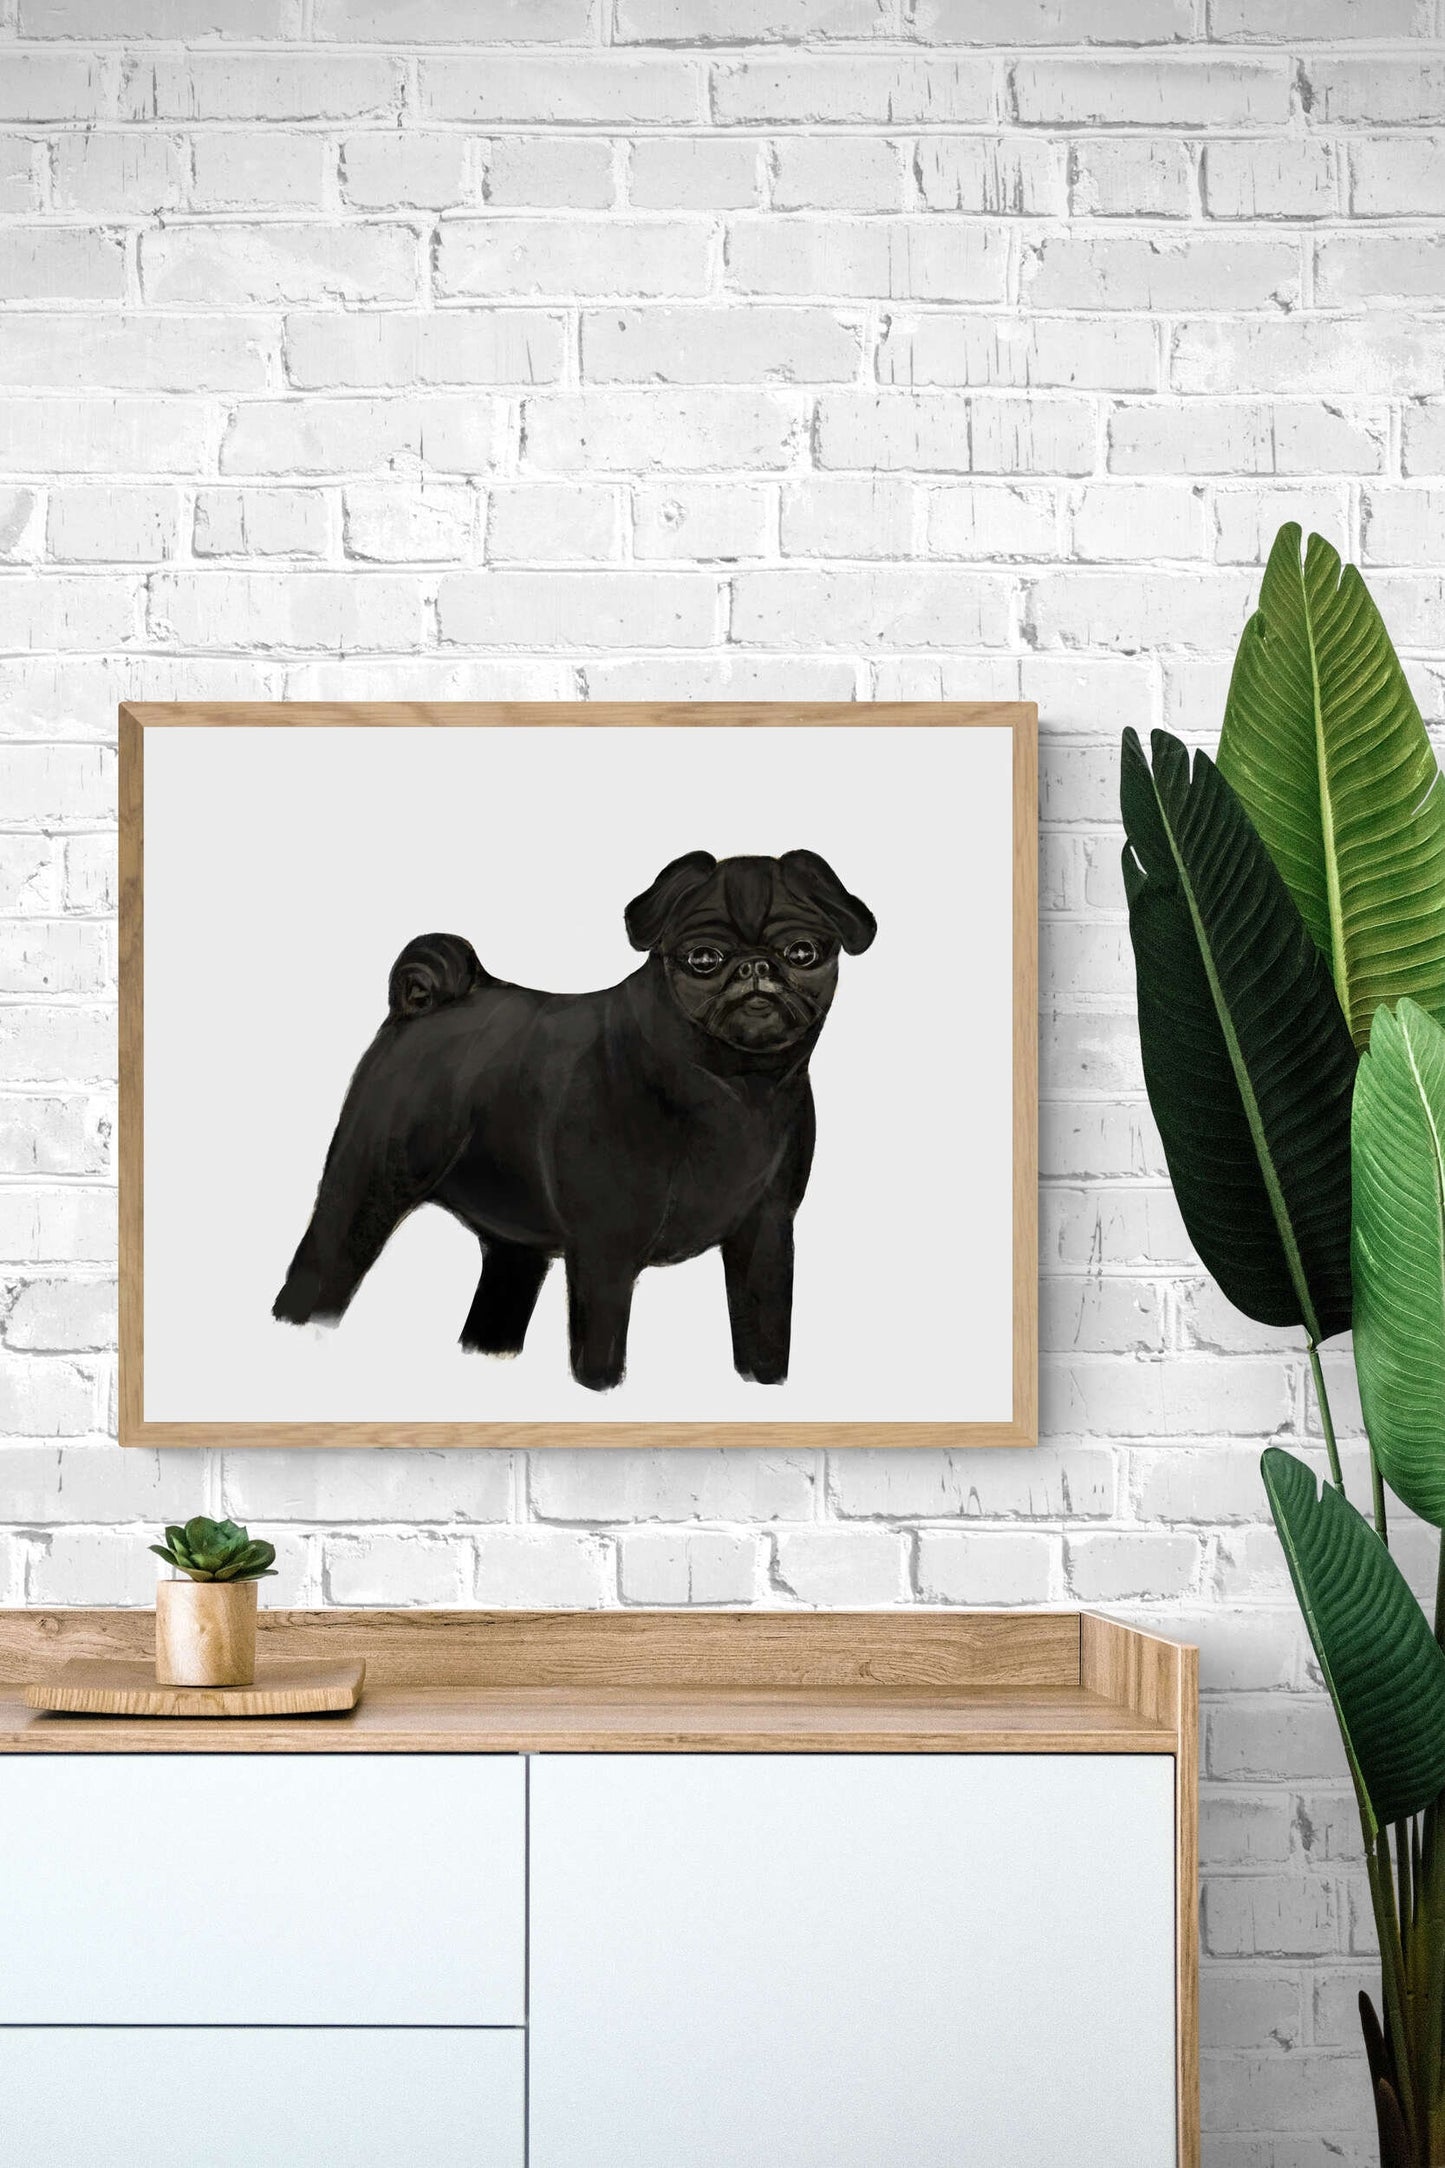 Black Pug Print, Pug Painting, Pug Portrait, Doggy artwork, Cute Pug Print, Living Room Wall Art, Bedroom Wall Print, Puppy Home Decor